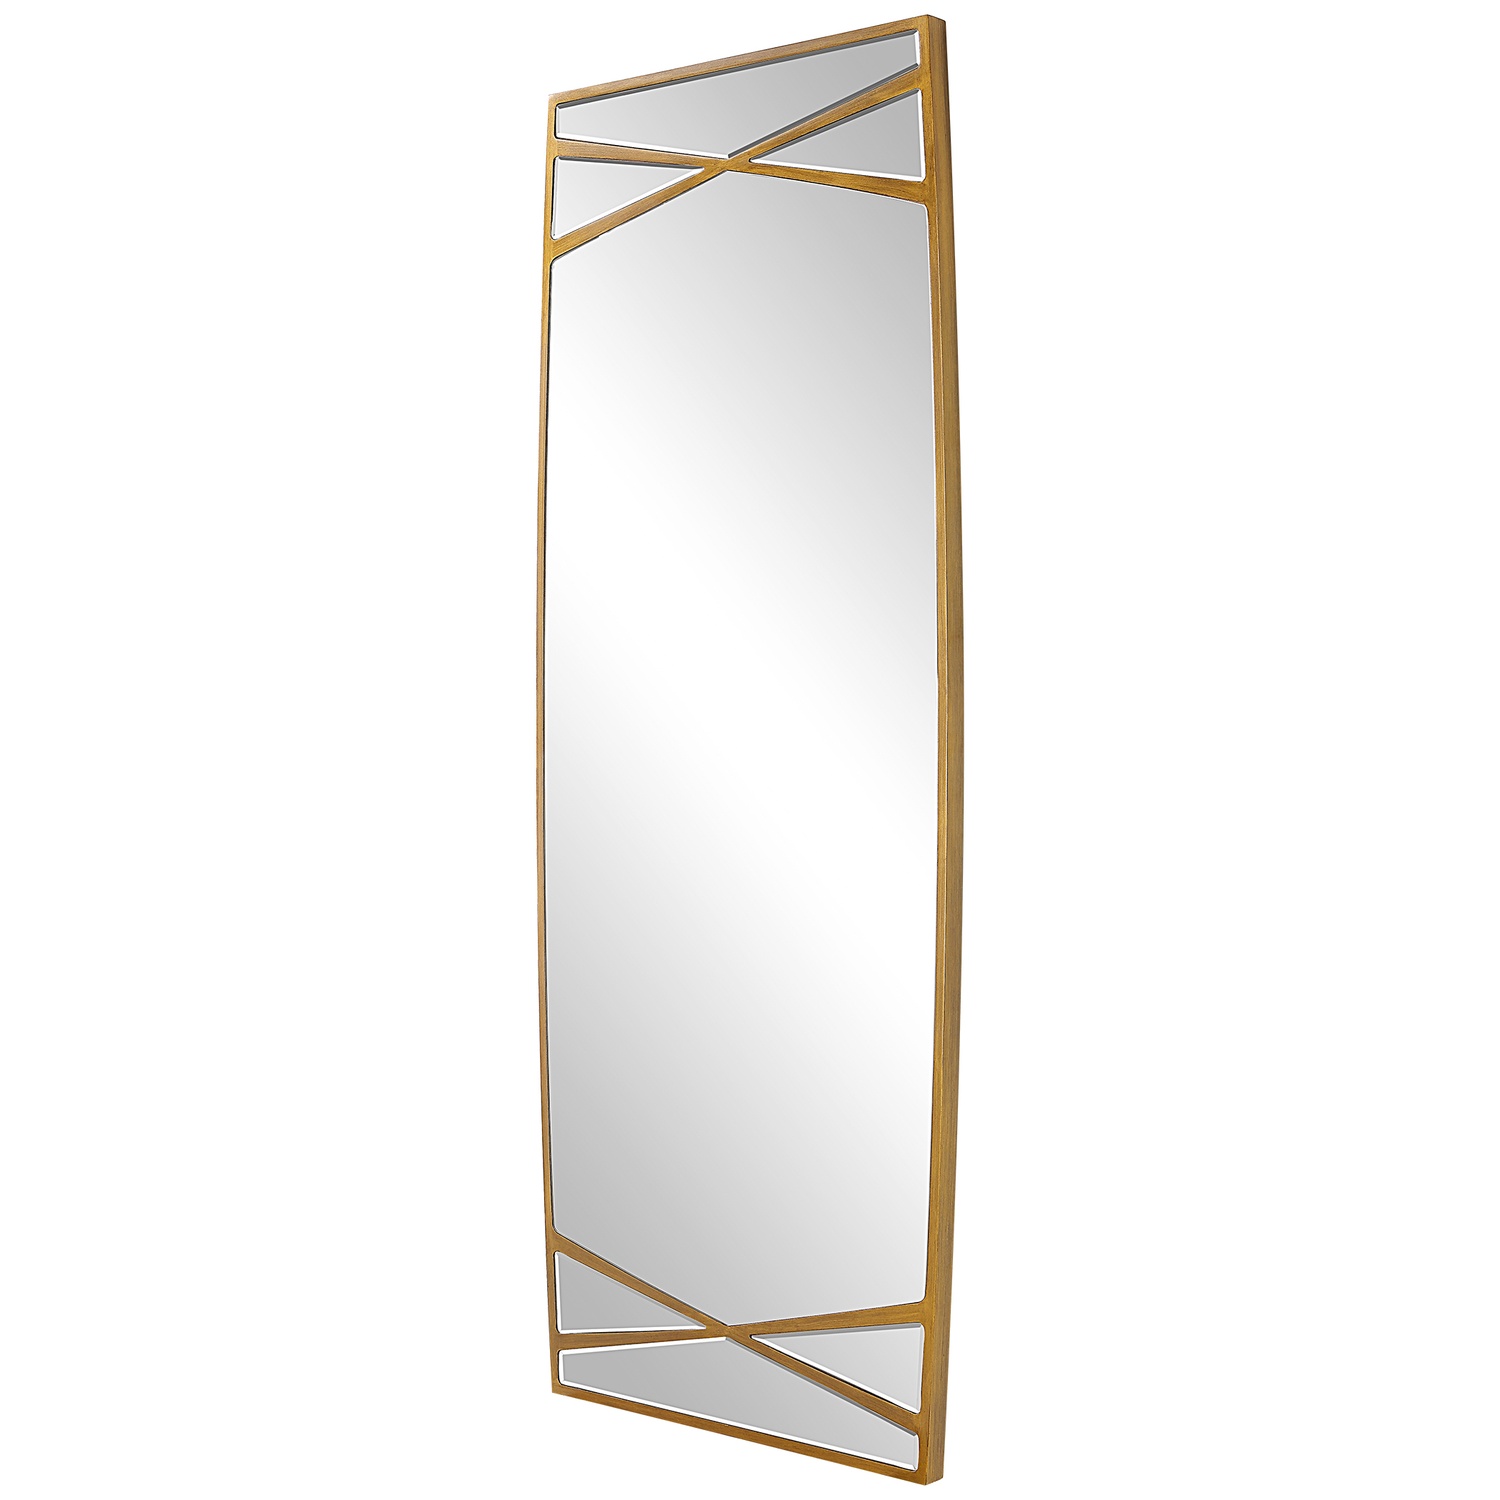 Gentry-Oversized Gold Mirror